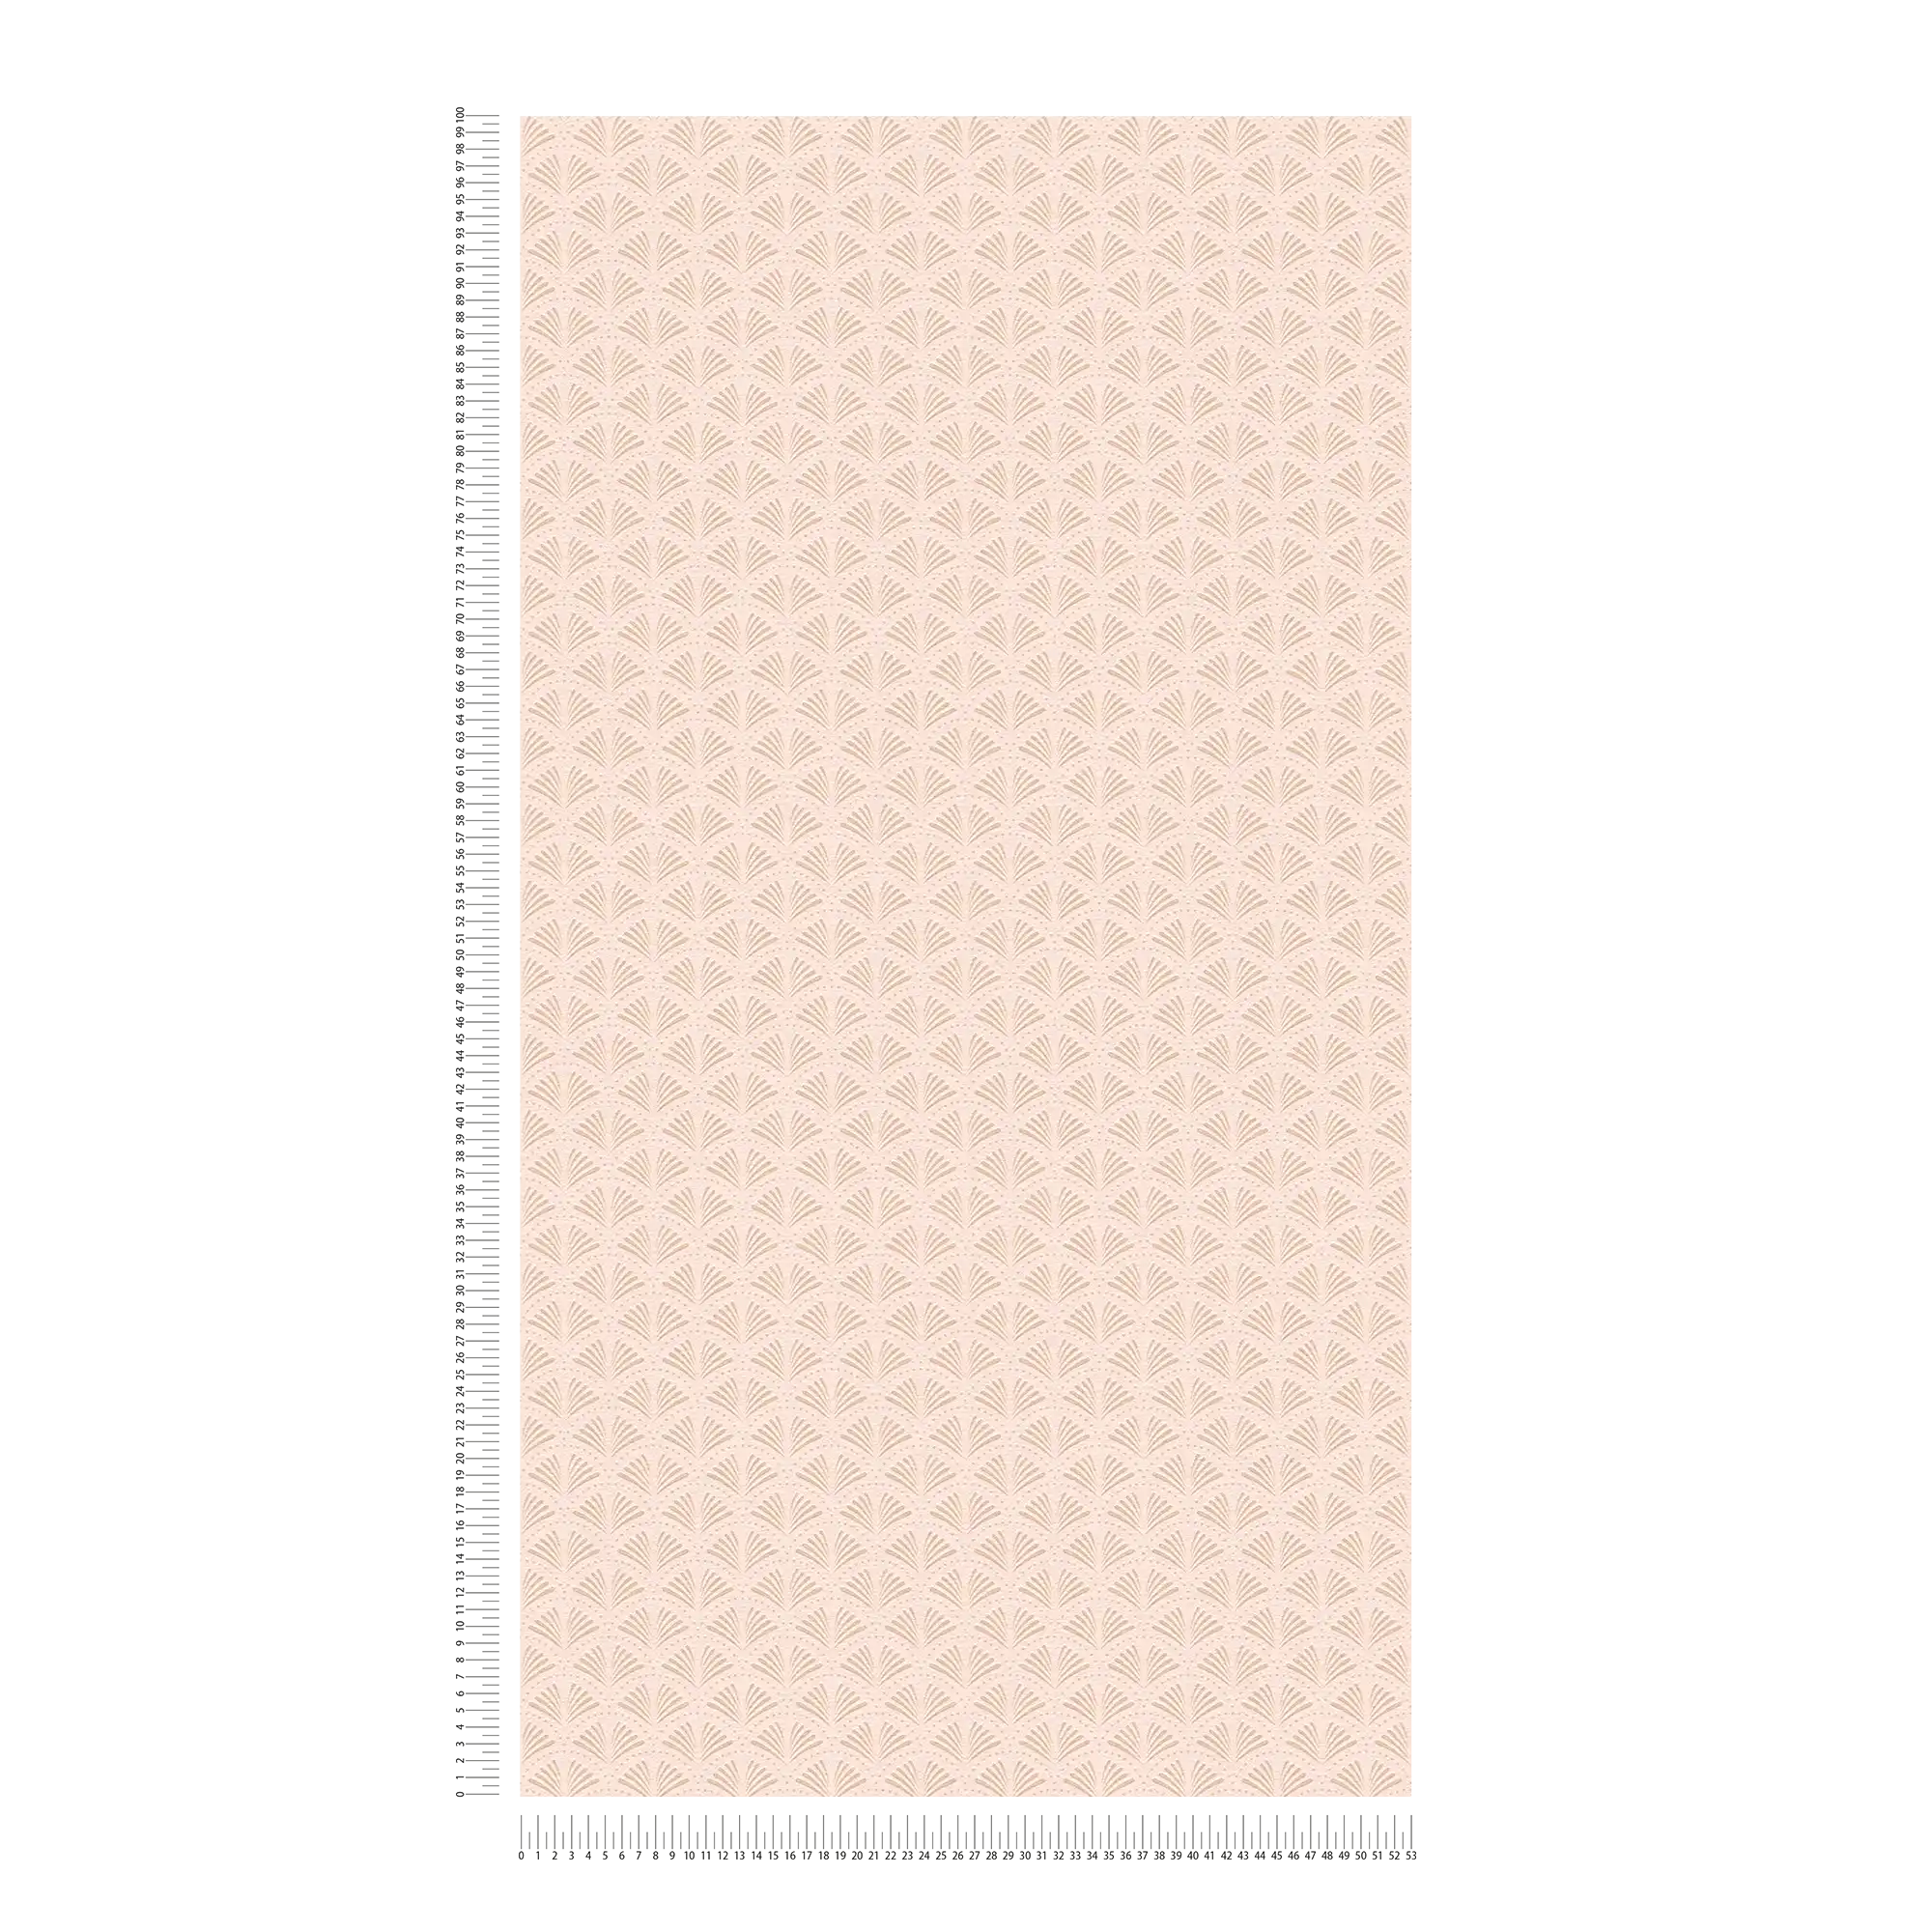             Pink non-woven wallpaper with texture & metallic pattern - cream, metallic, pink
        